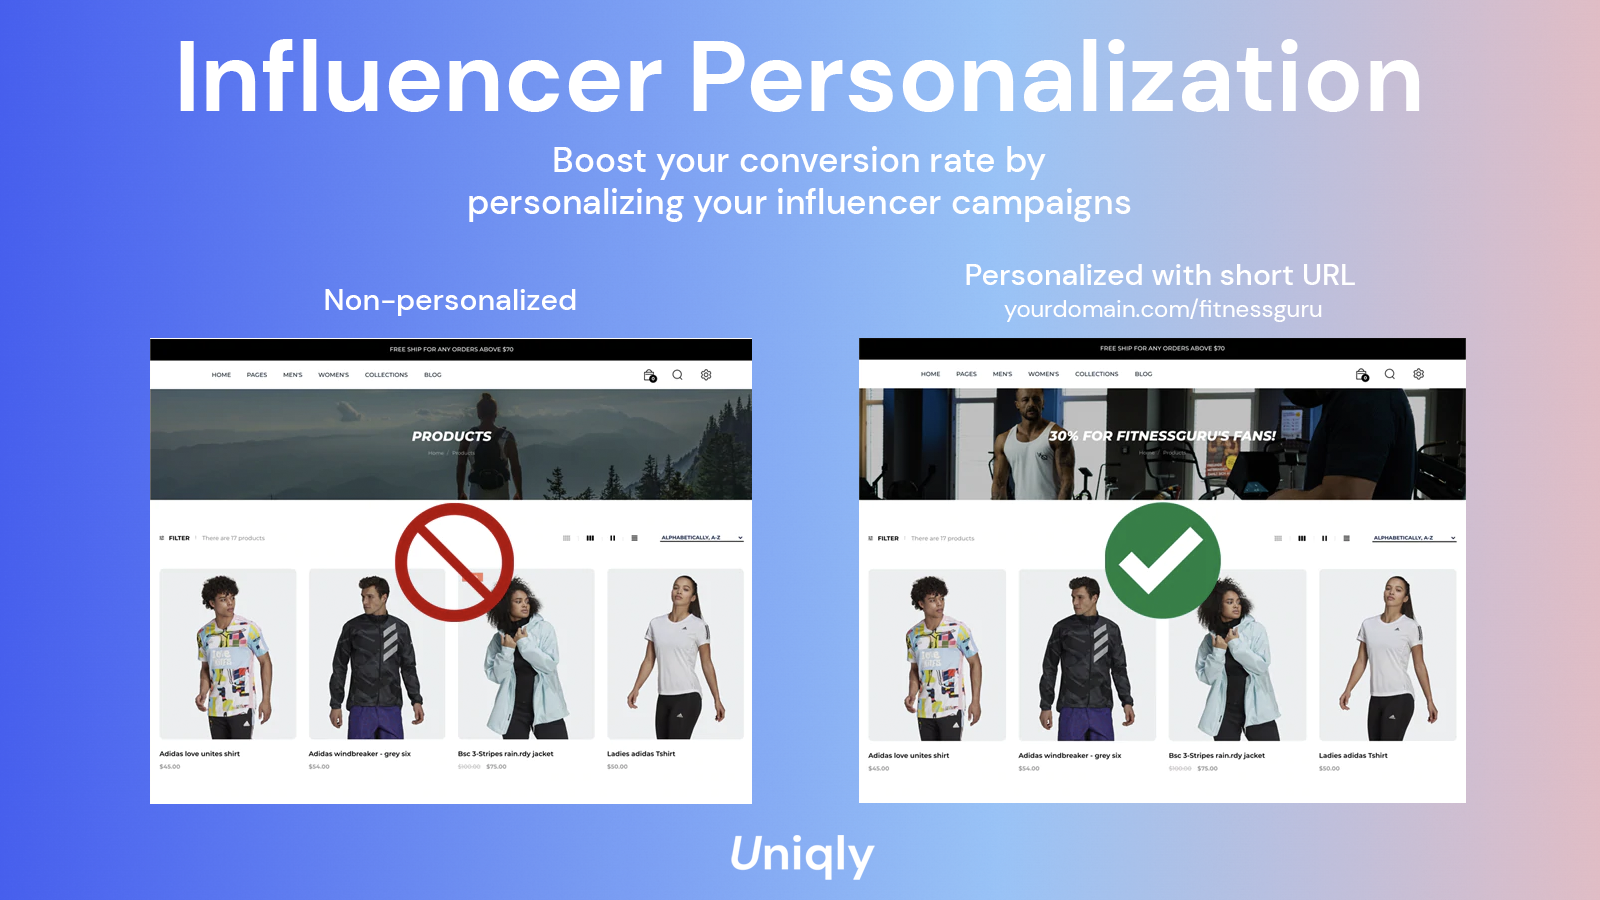 Influencer personalization